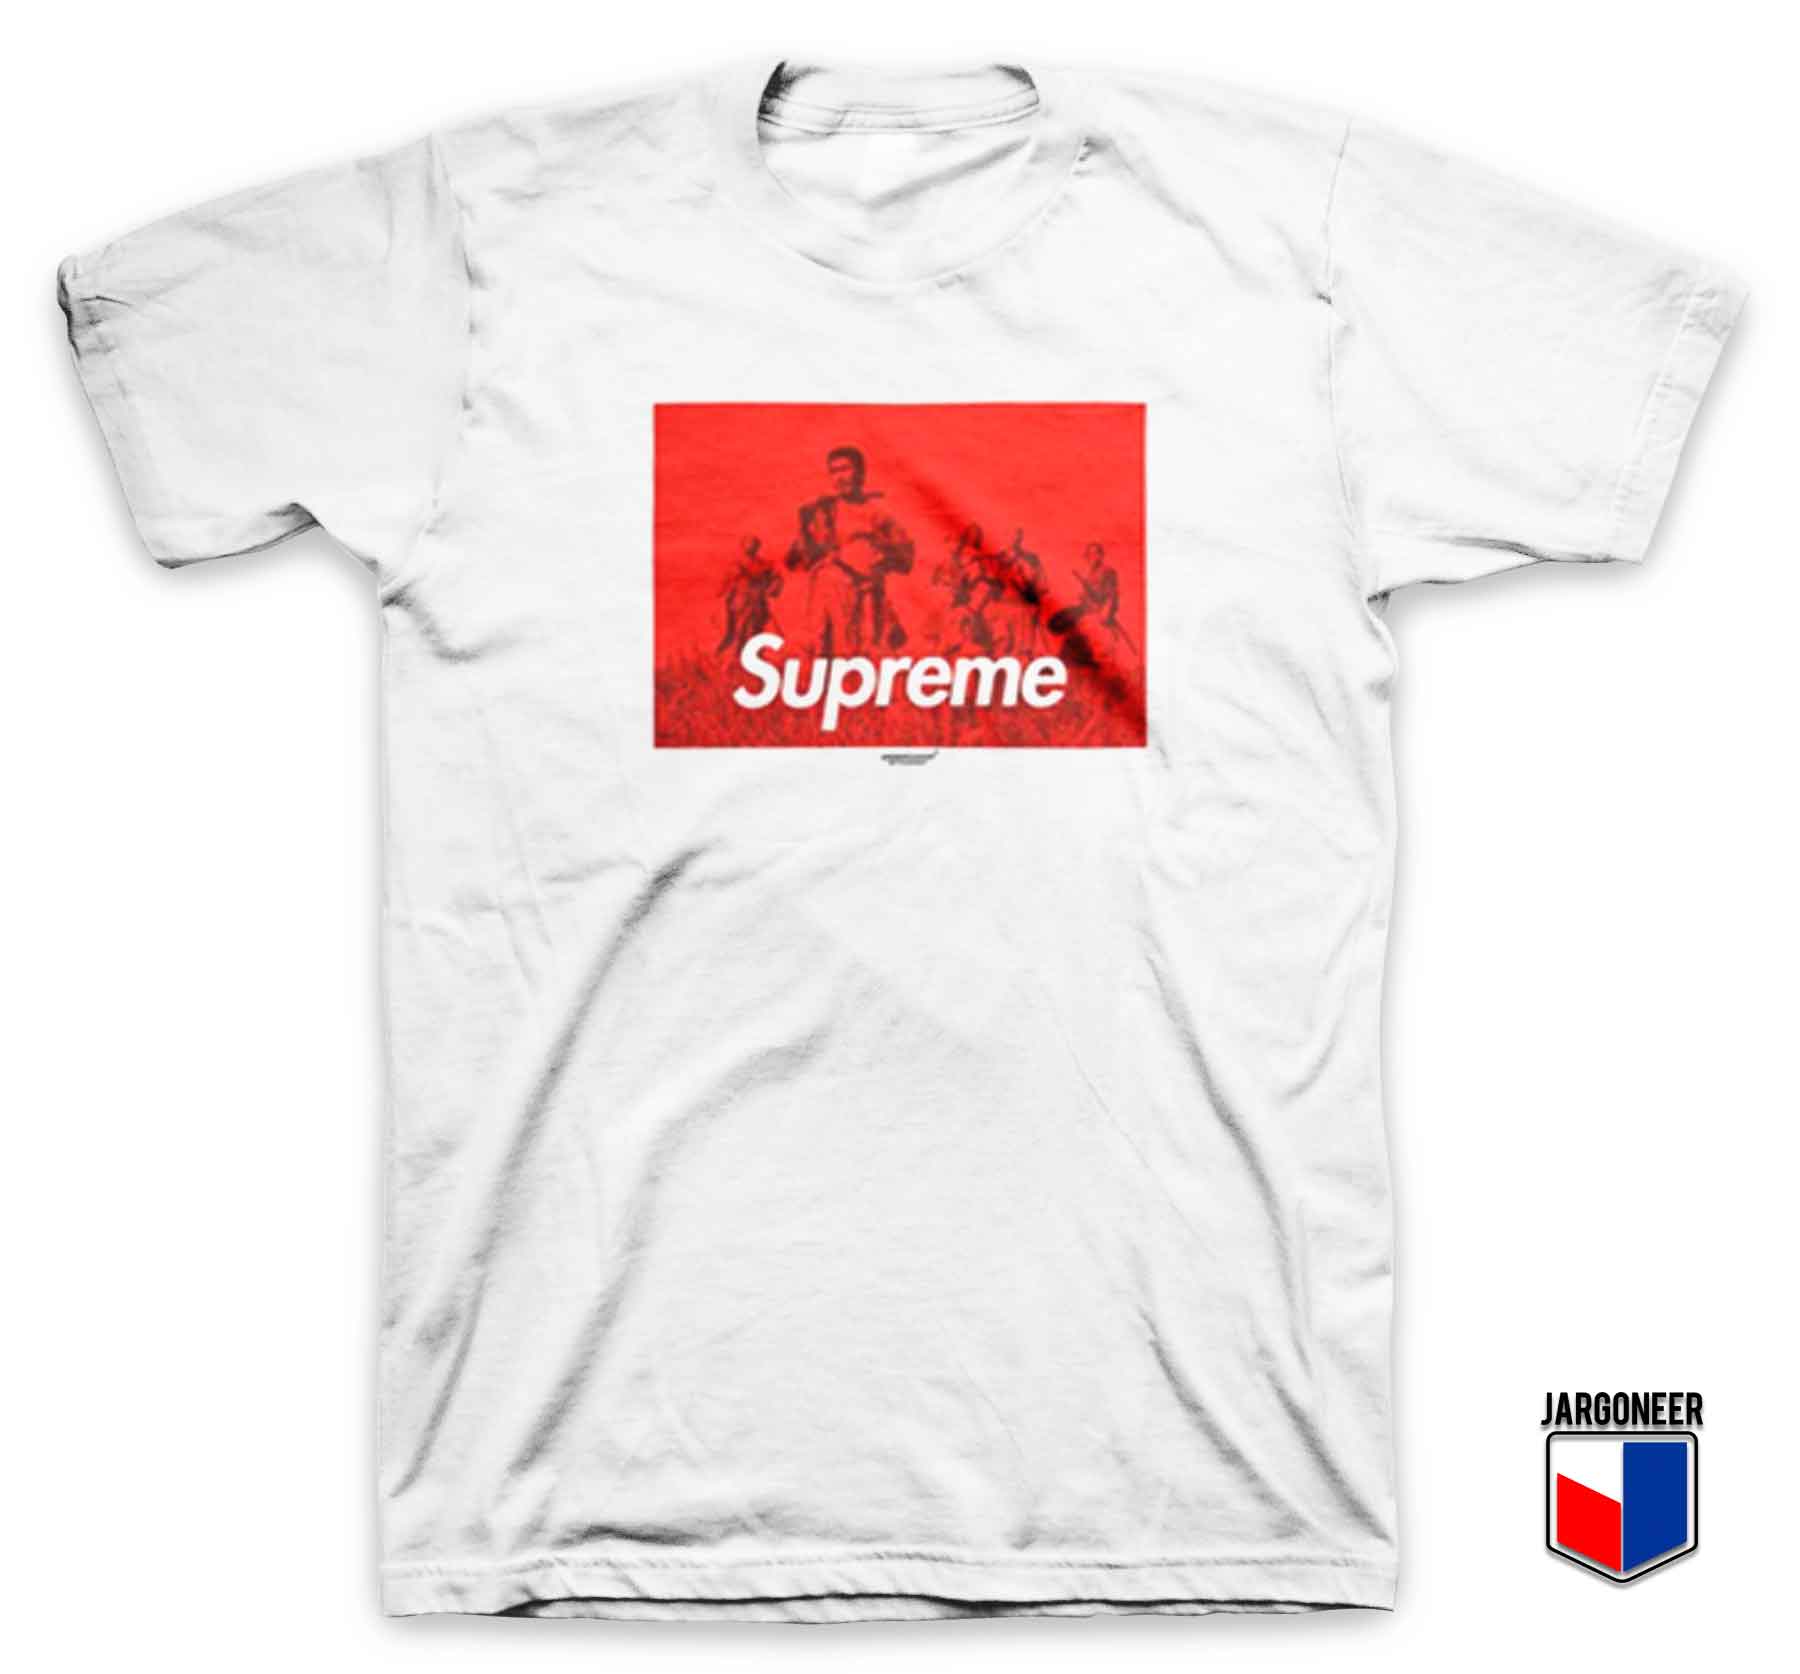 Supreme Undercover Seven Samurai - Shop Unique Graphic Cool Shirt Designs